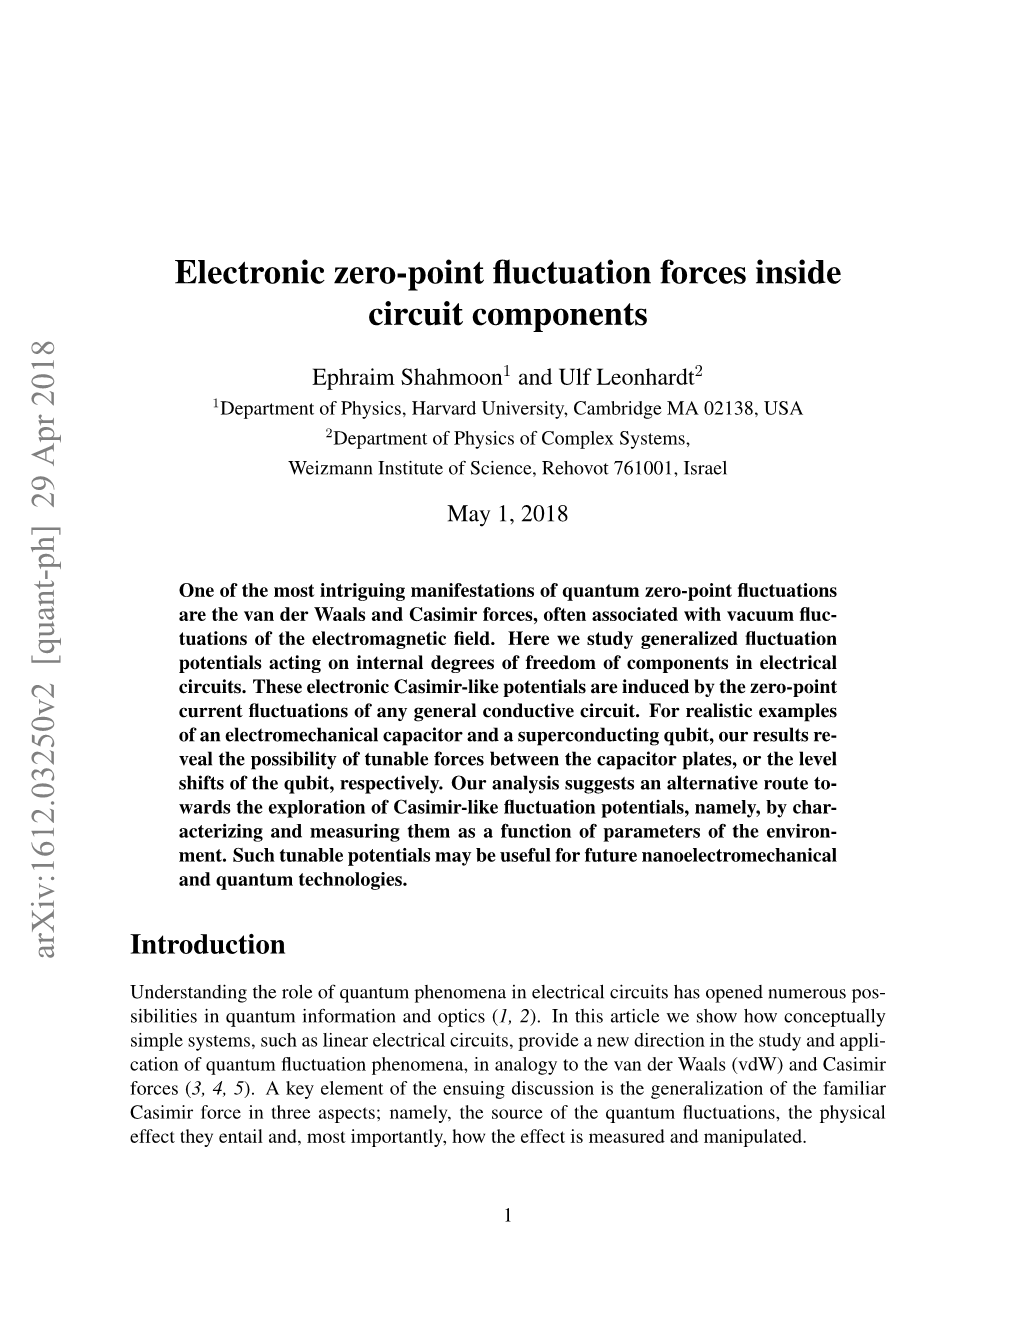 Electronic Zero-Point Fluctuation Forces Inside Circuit Components Arxiv